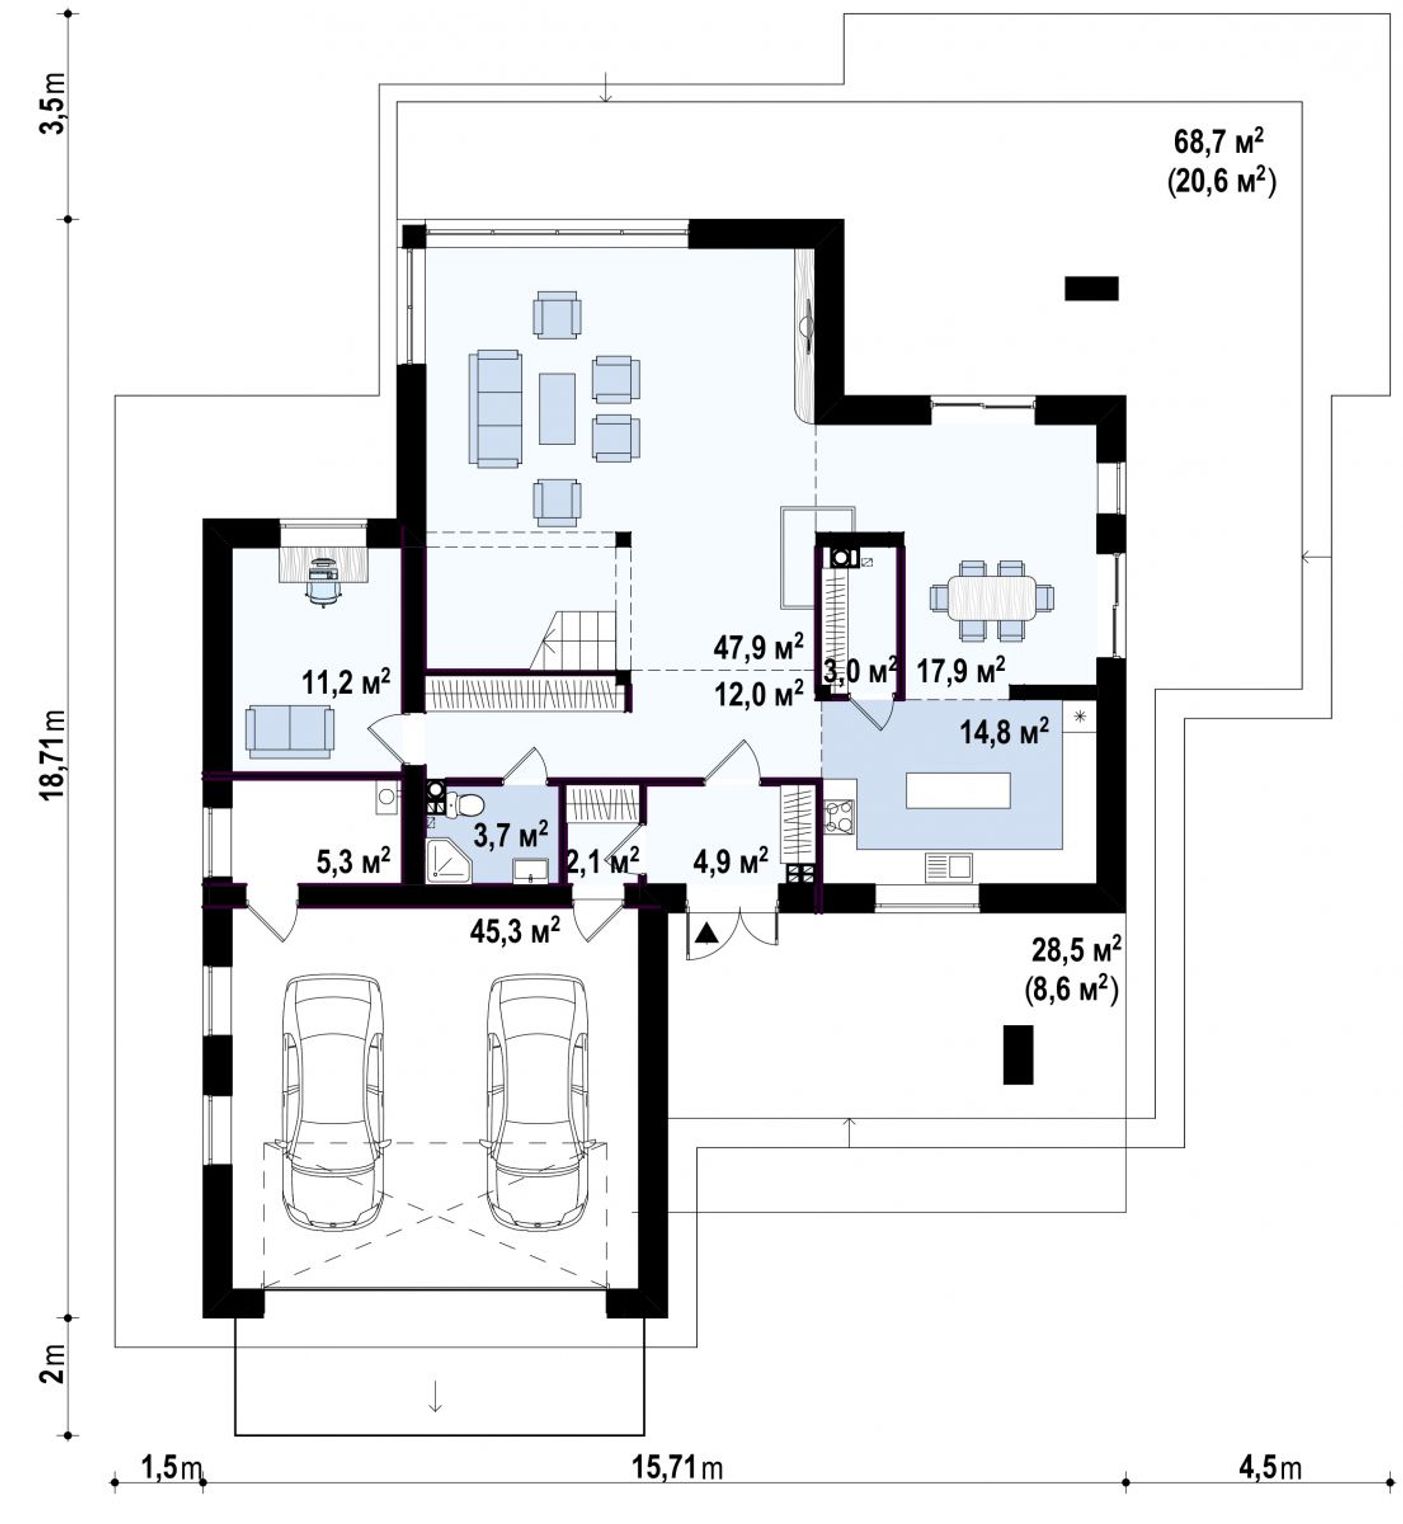 1-ый этаж - план проекта Zx108